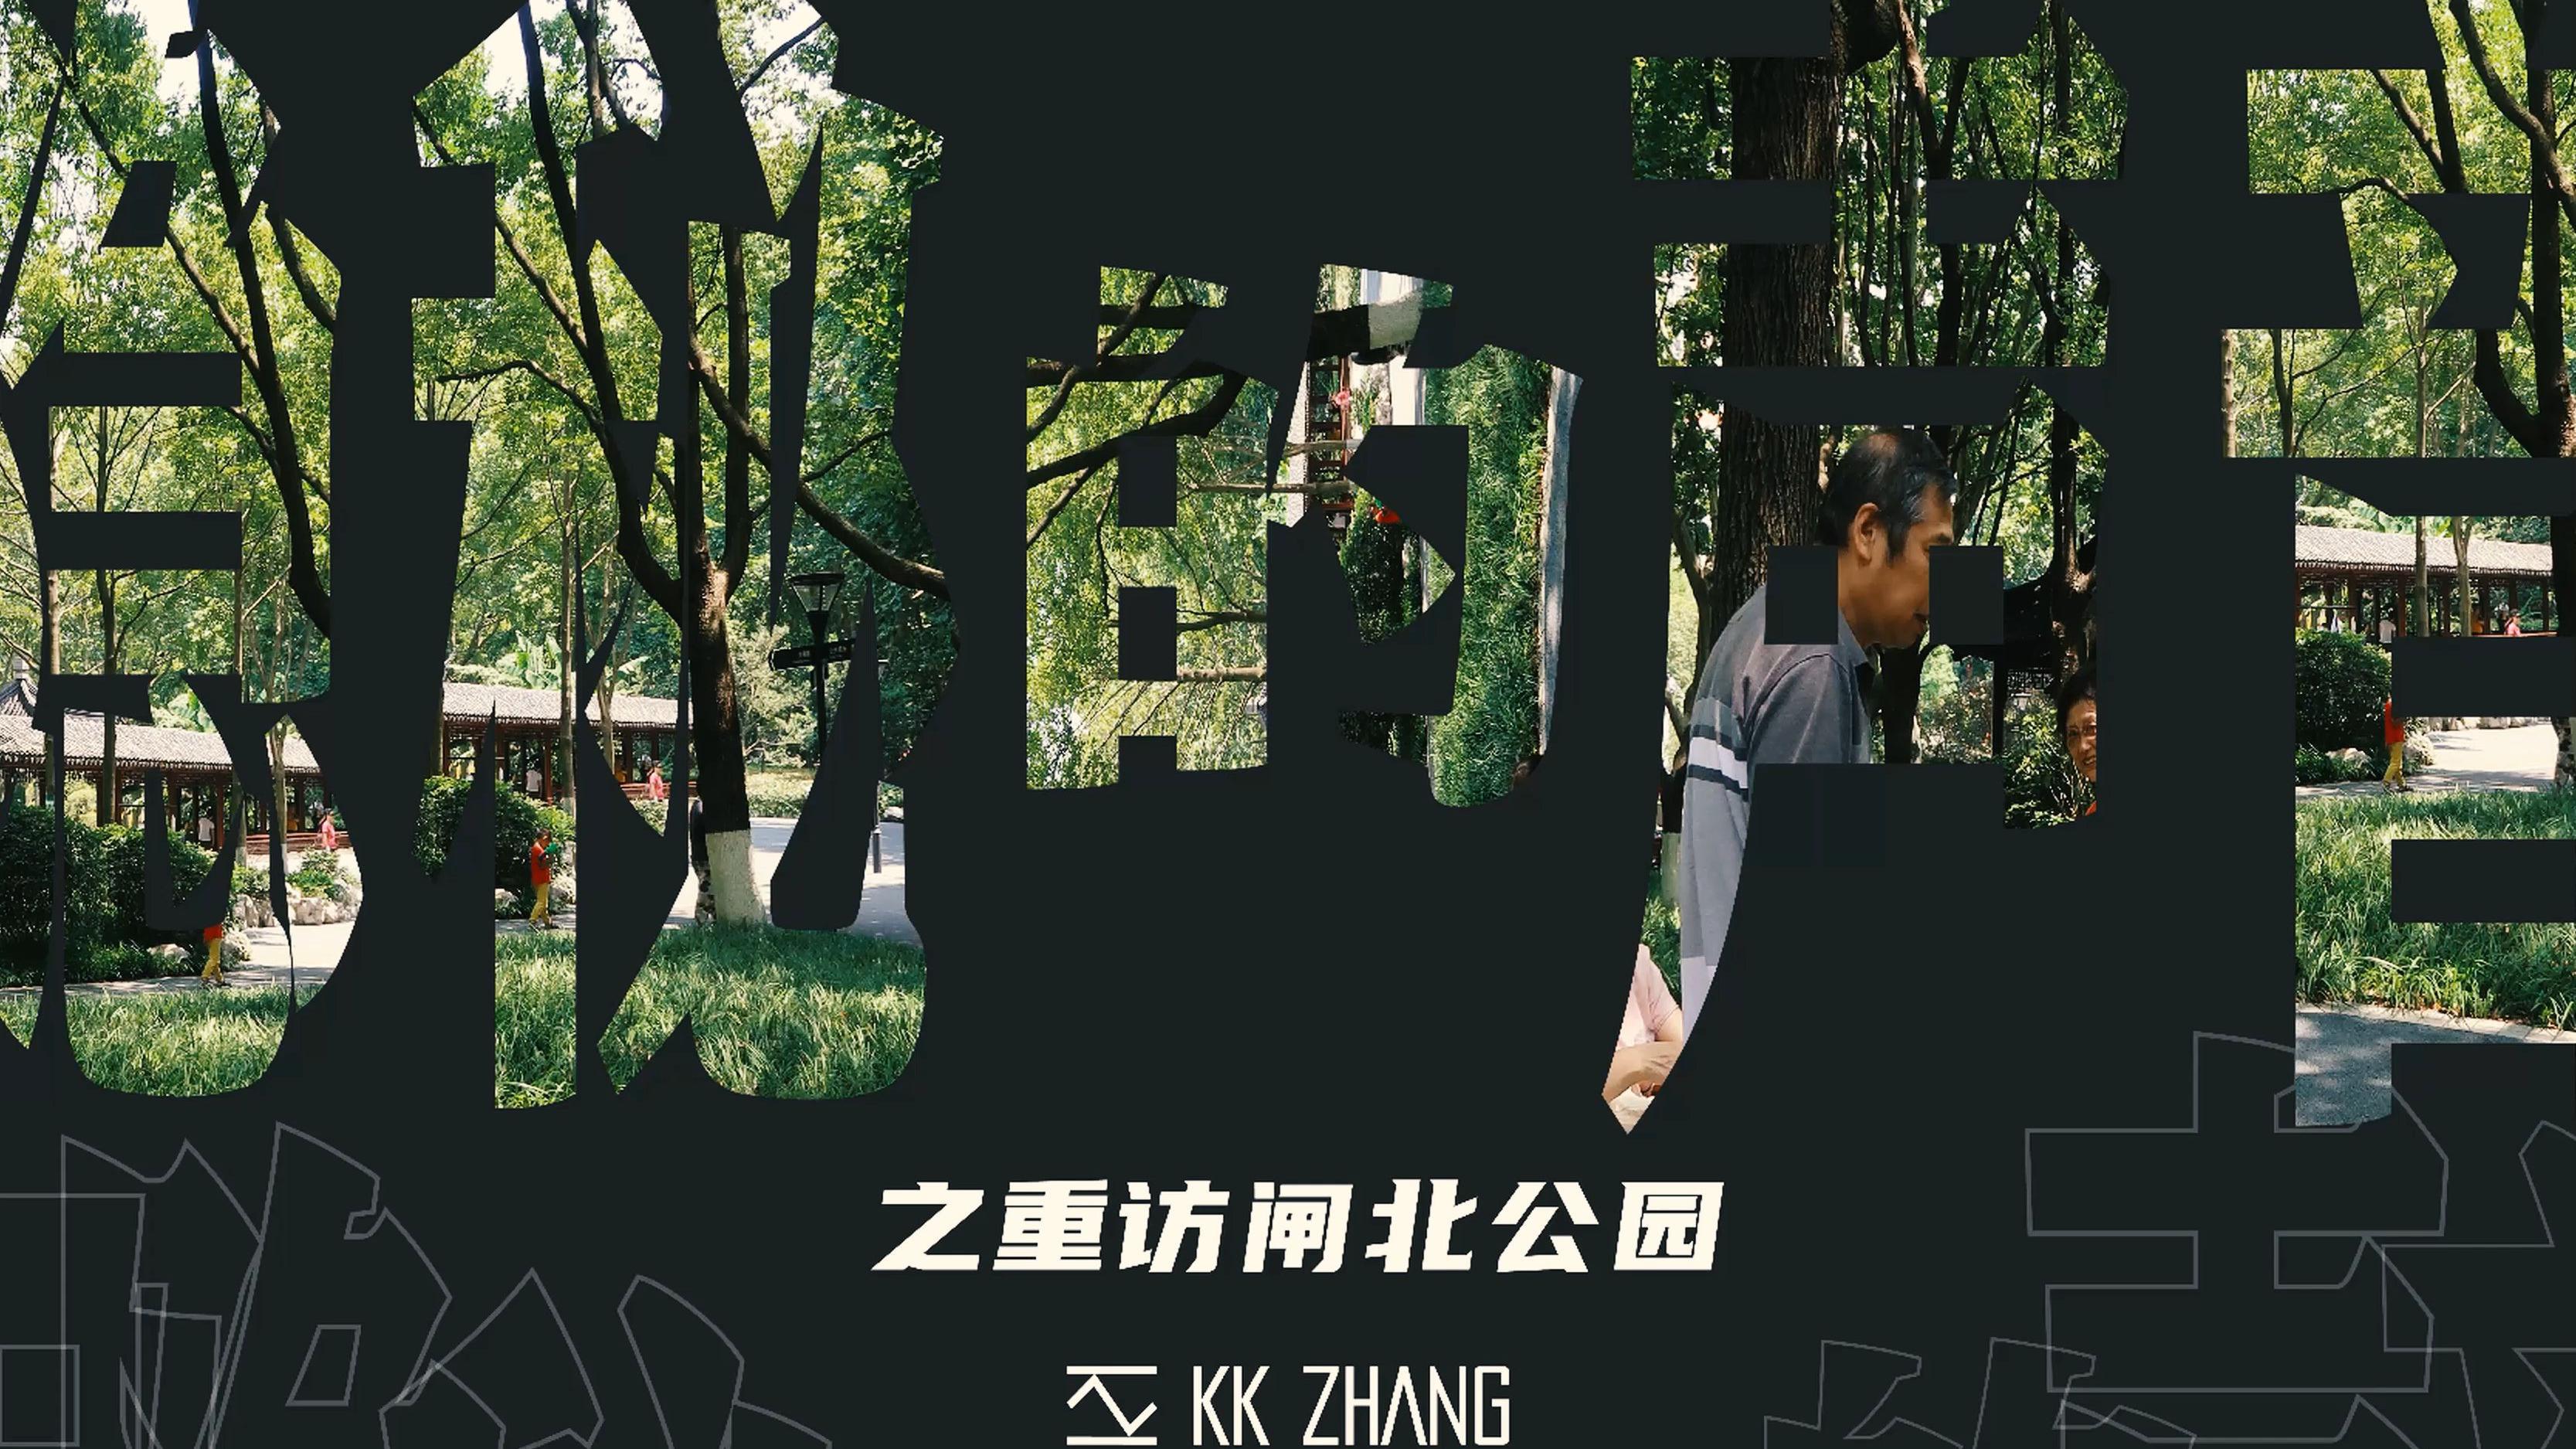 KK ZHANG - 公园节拍 Park Beats